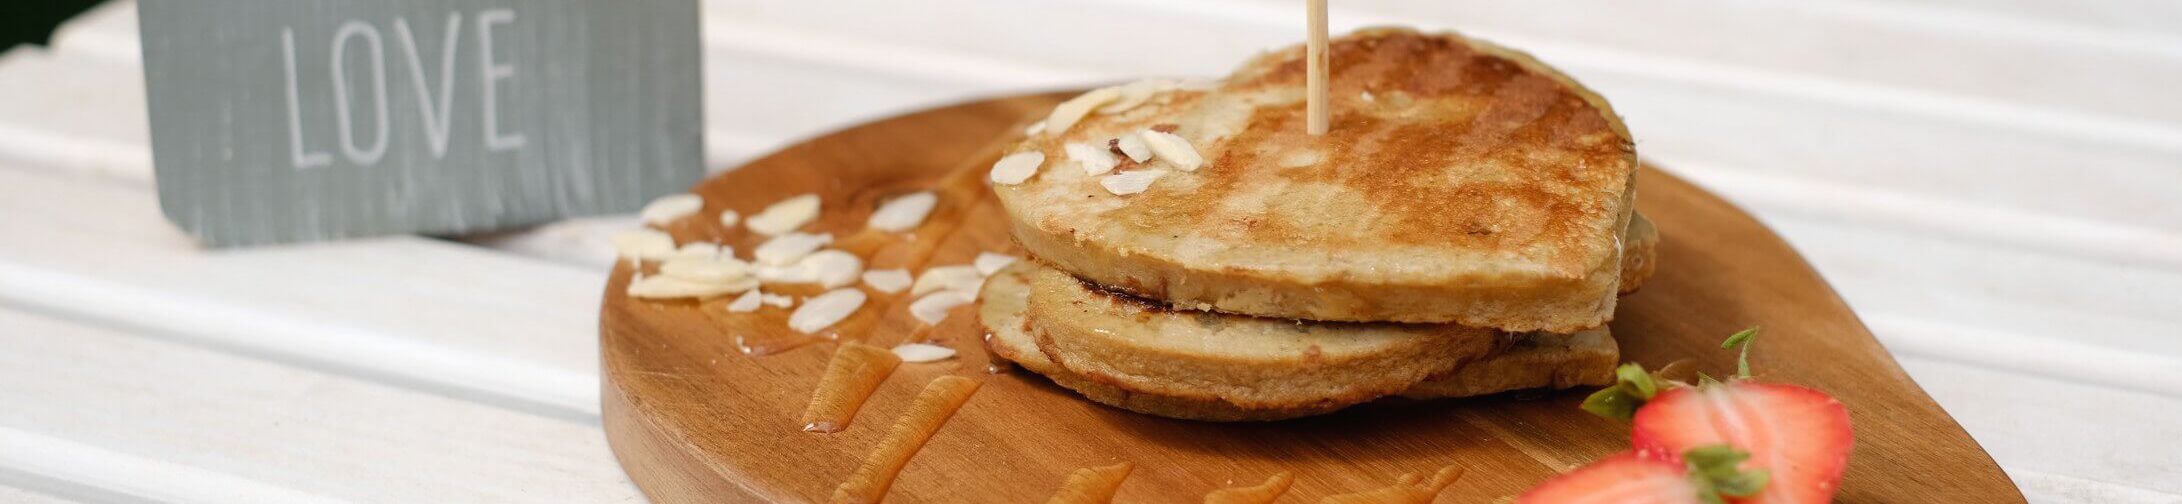 protein-pancakes-ronis-deli-strawberry-homemade